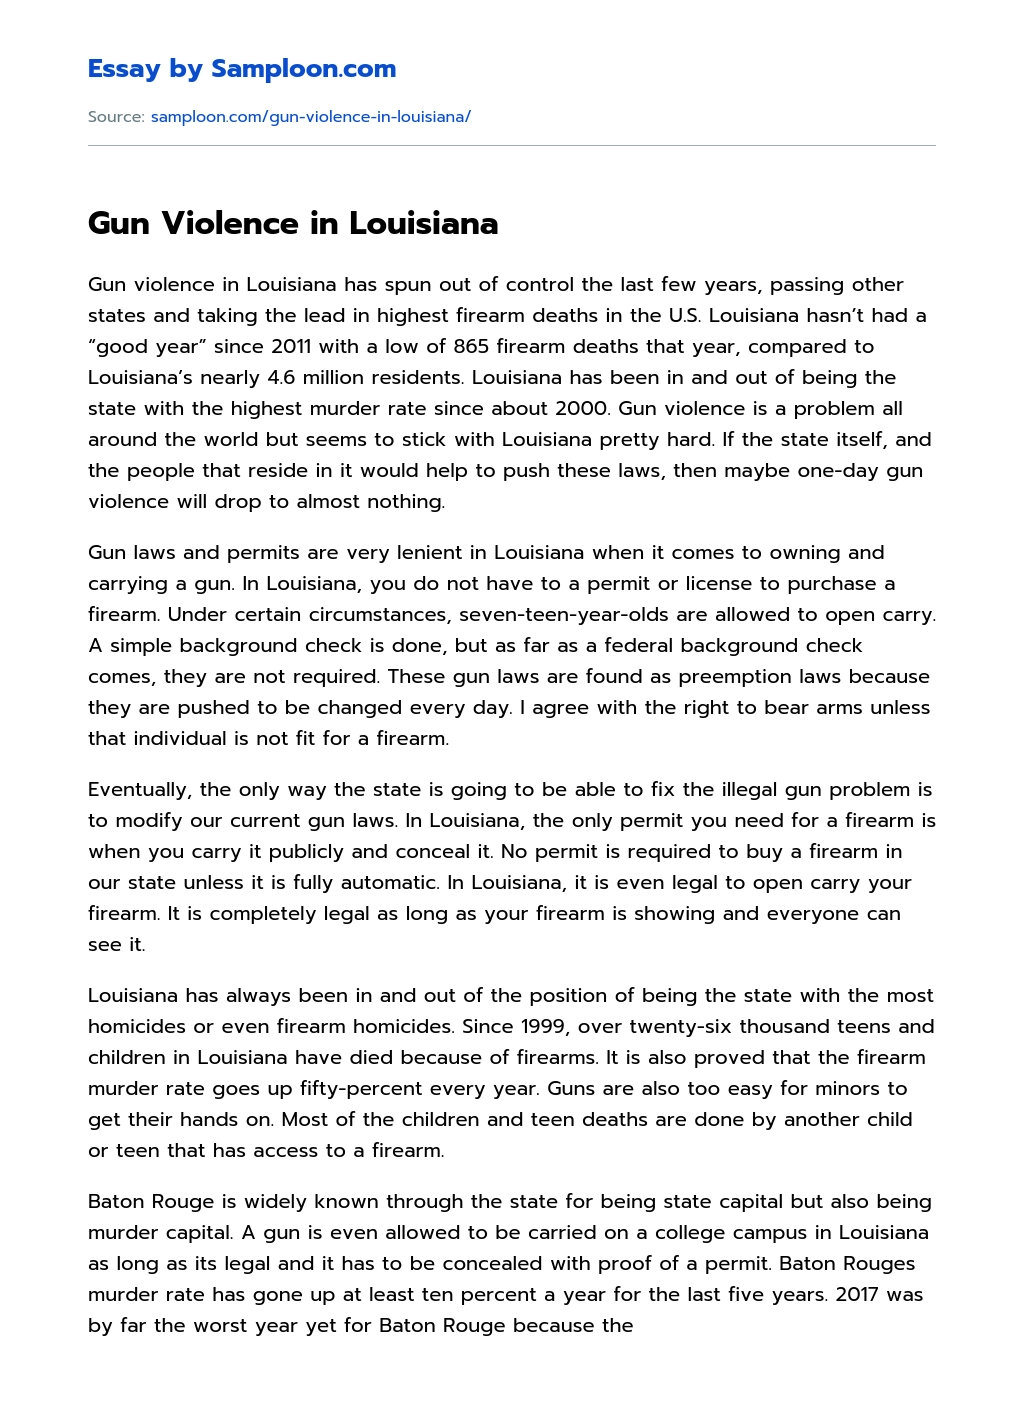 Gun Violence in Louisiana essay